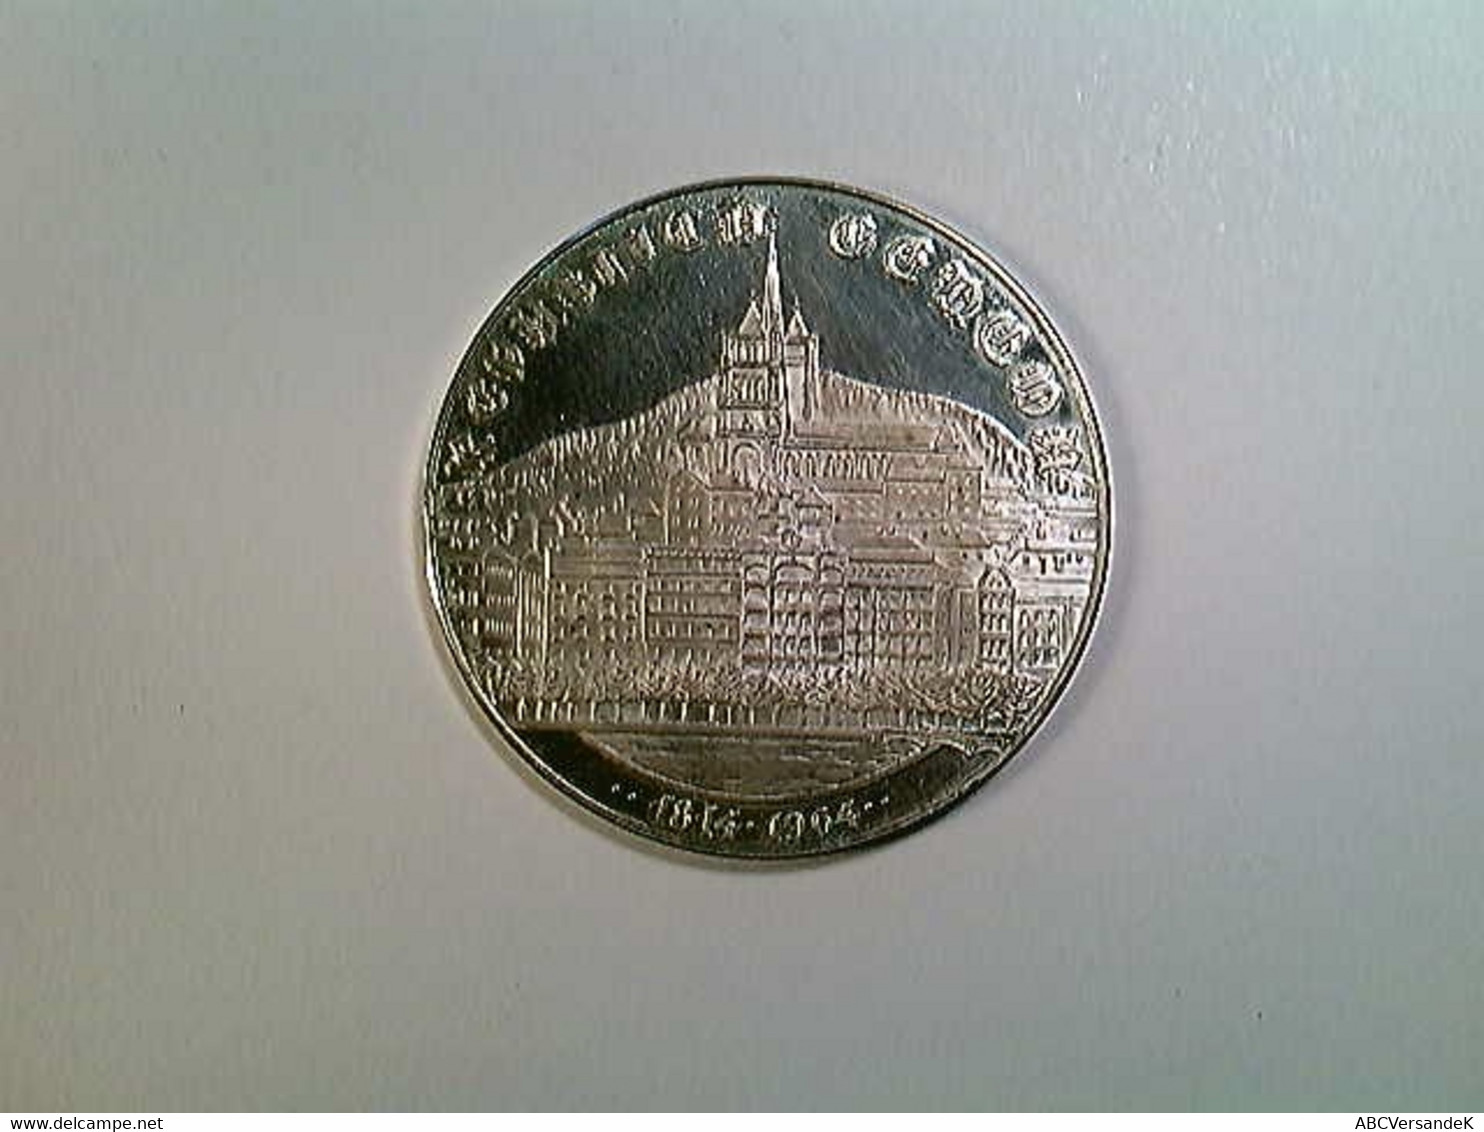 Münze Republica Geneva 1814-1964, Schweiz Kantonalmünze, Argor, Silber, SELTEN! - Numismatik